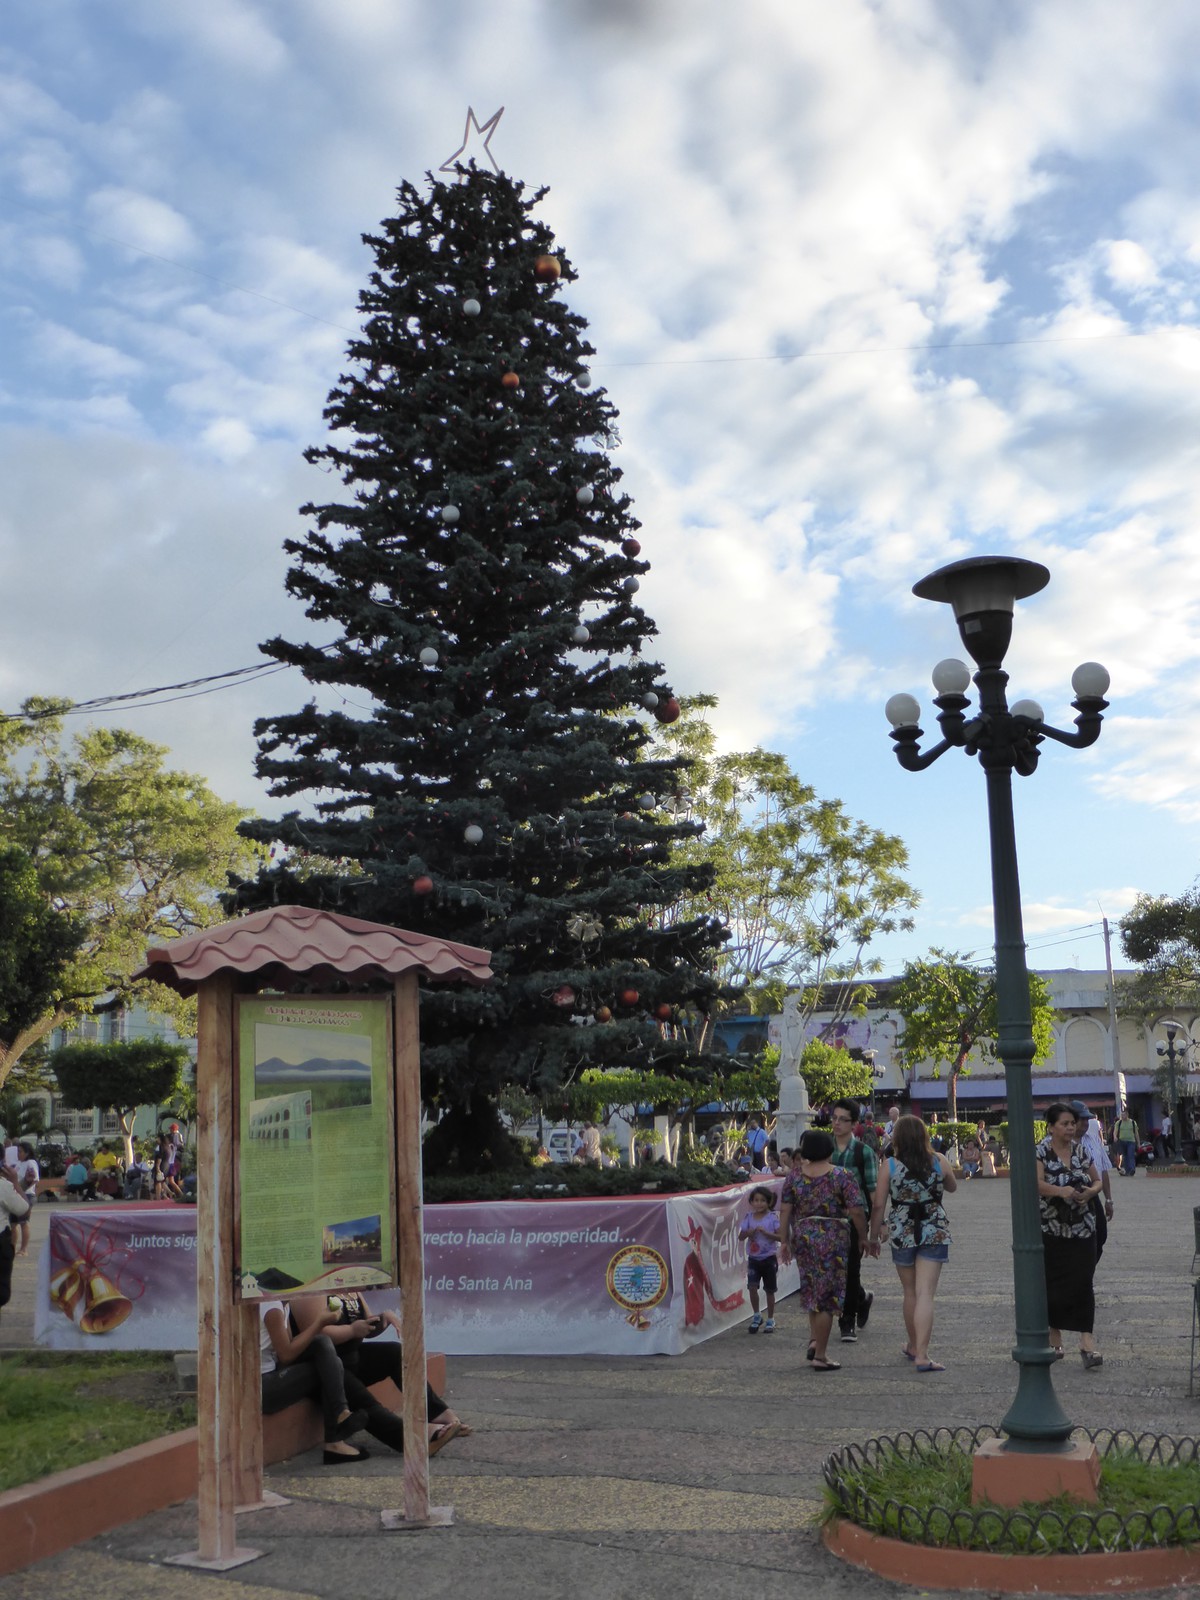 The Christmas tree in the main plaza in Santa Ana